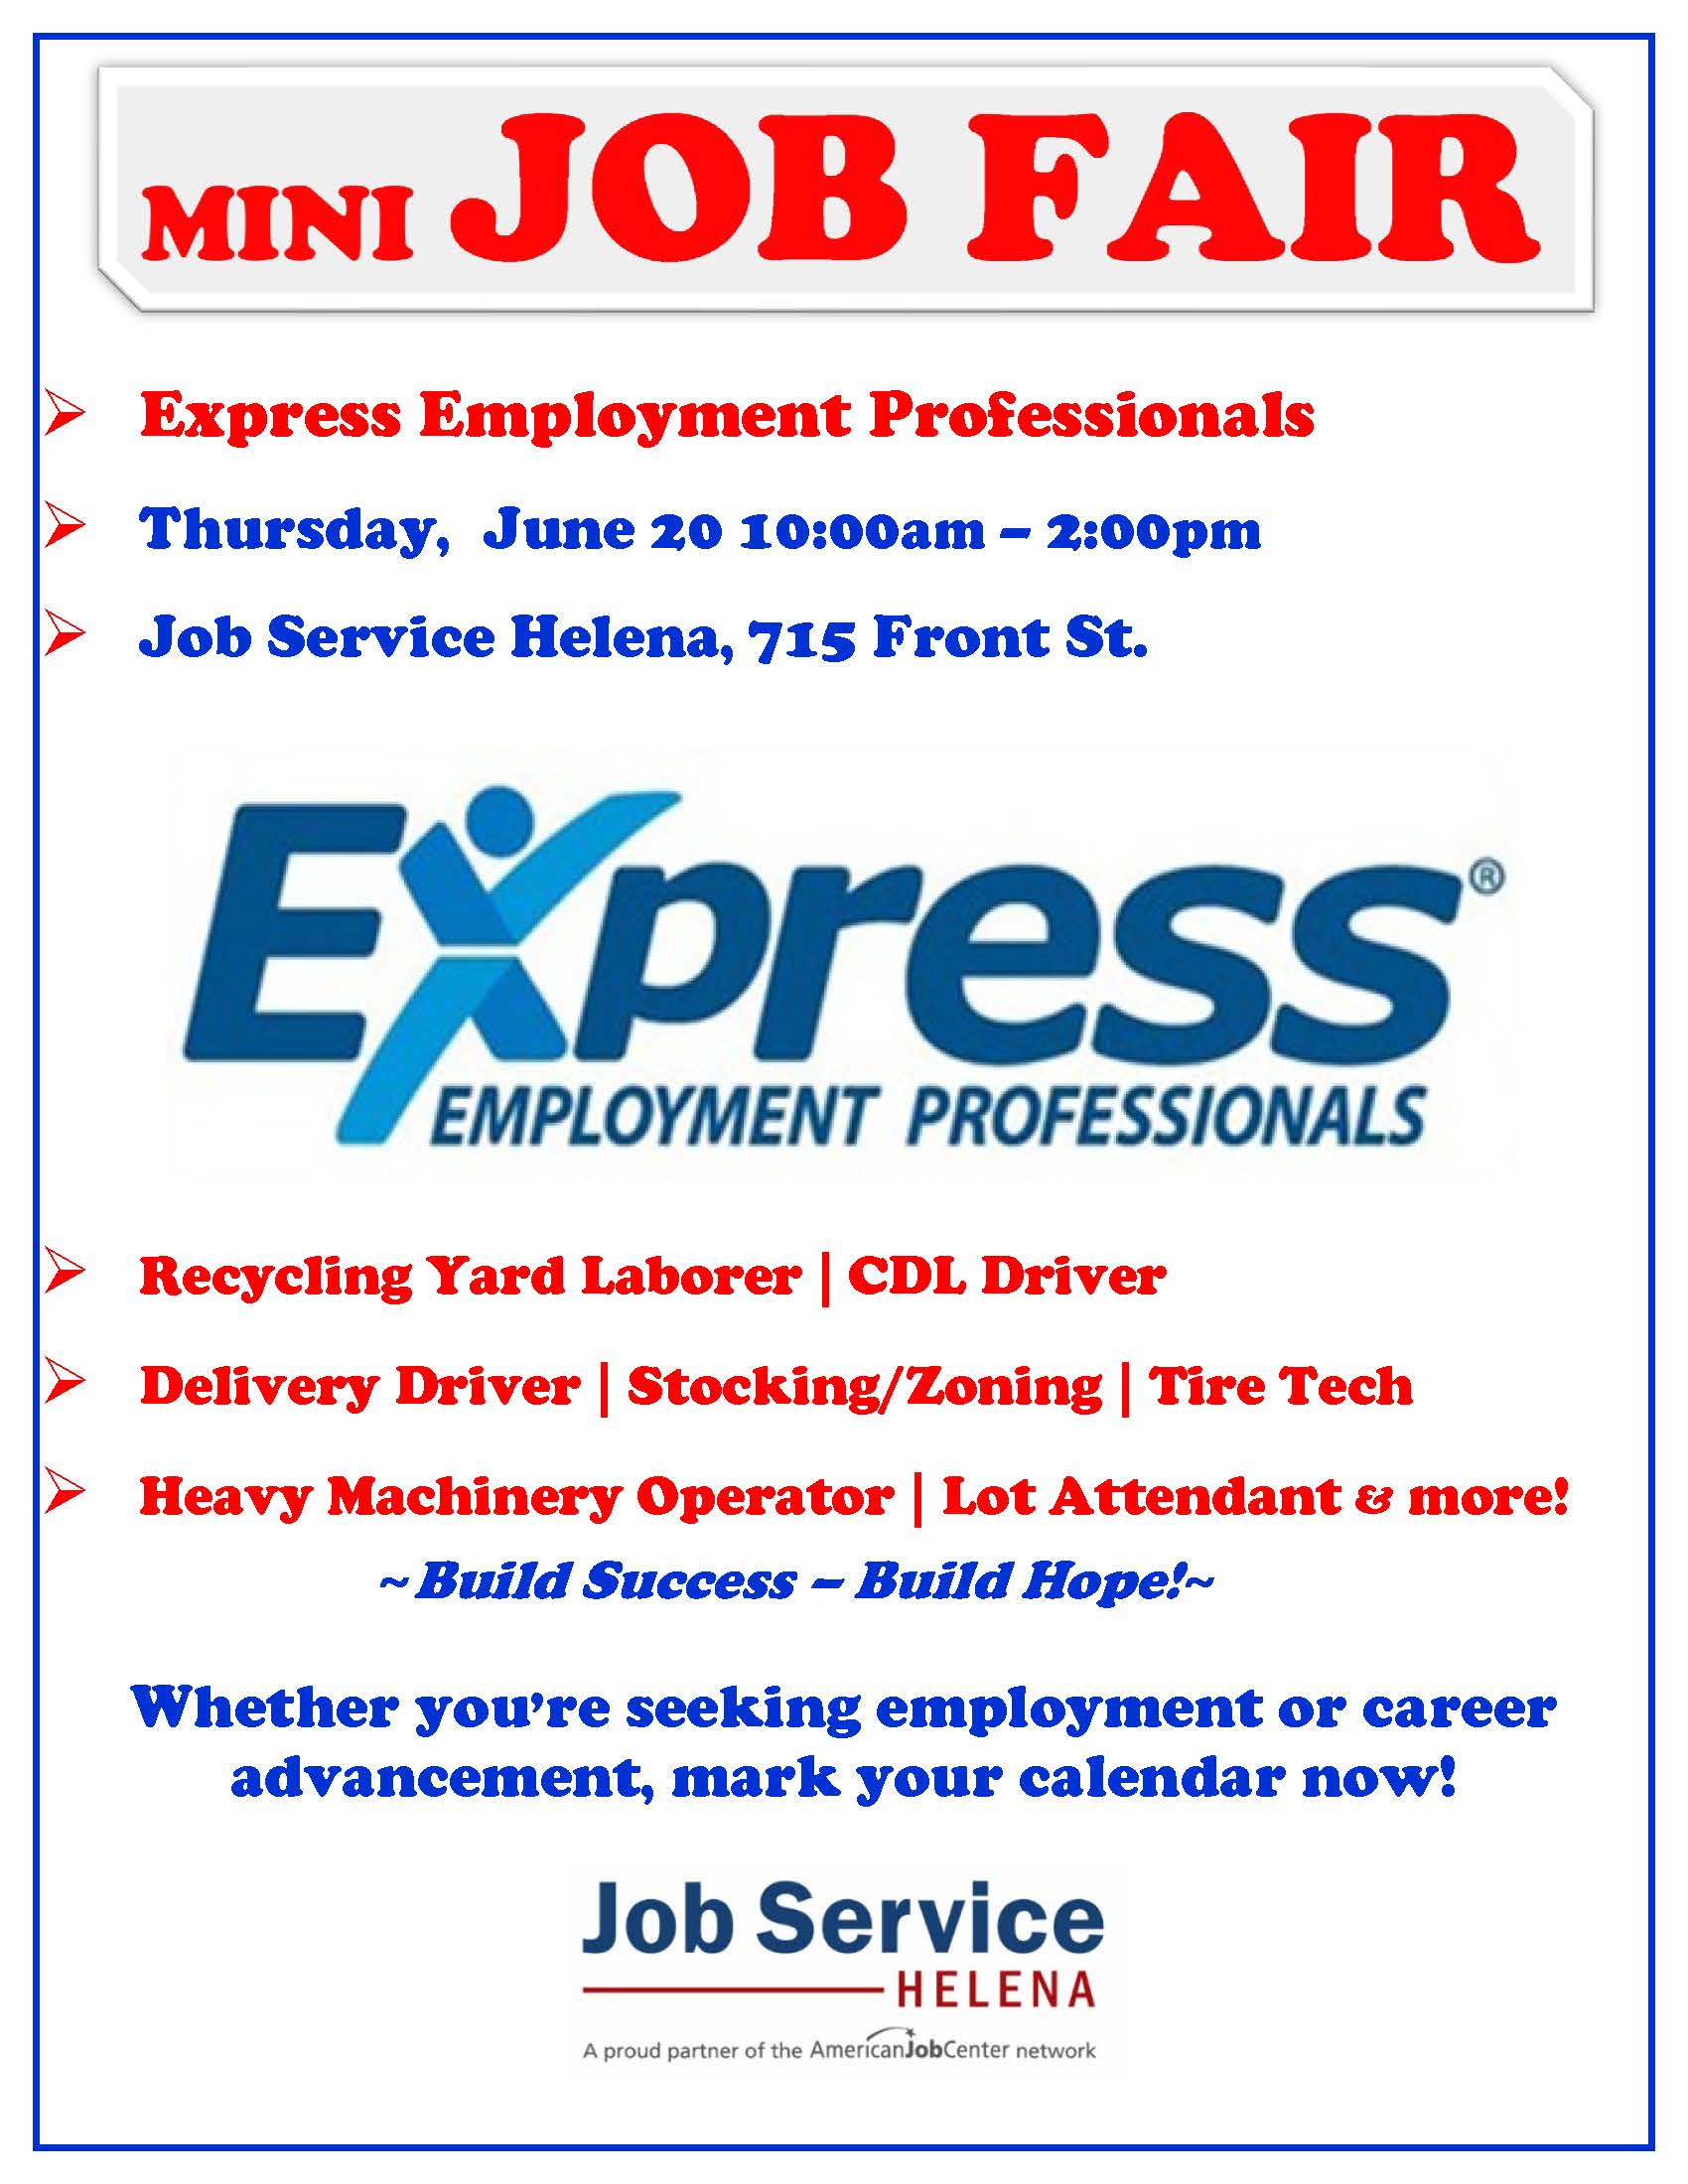 Helena - Express Employment Professional Mini Job Fair